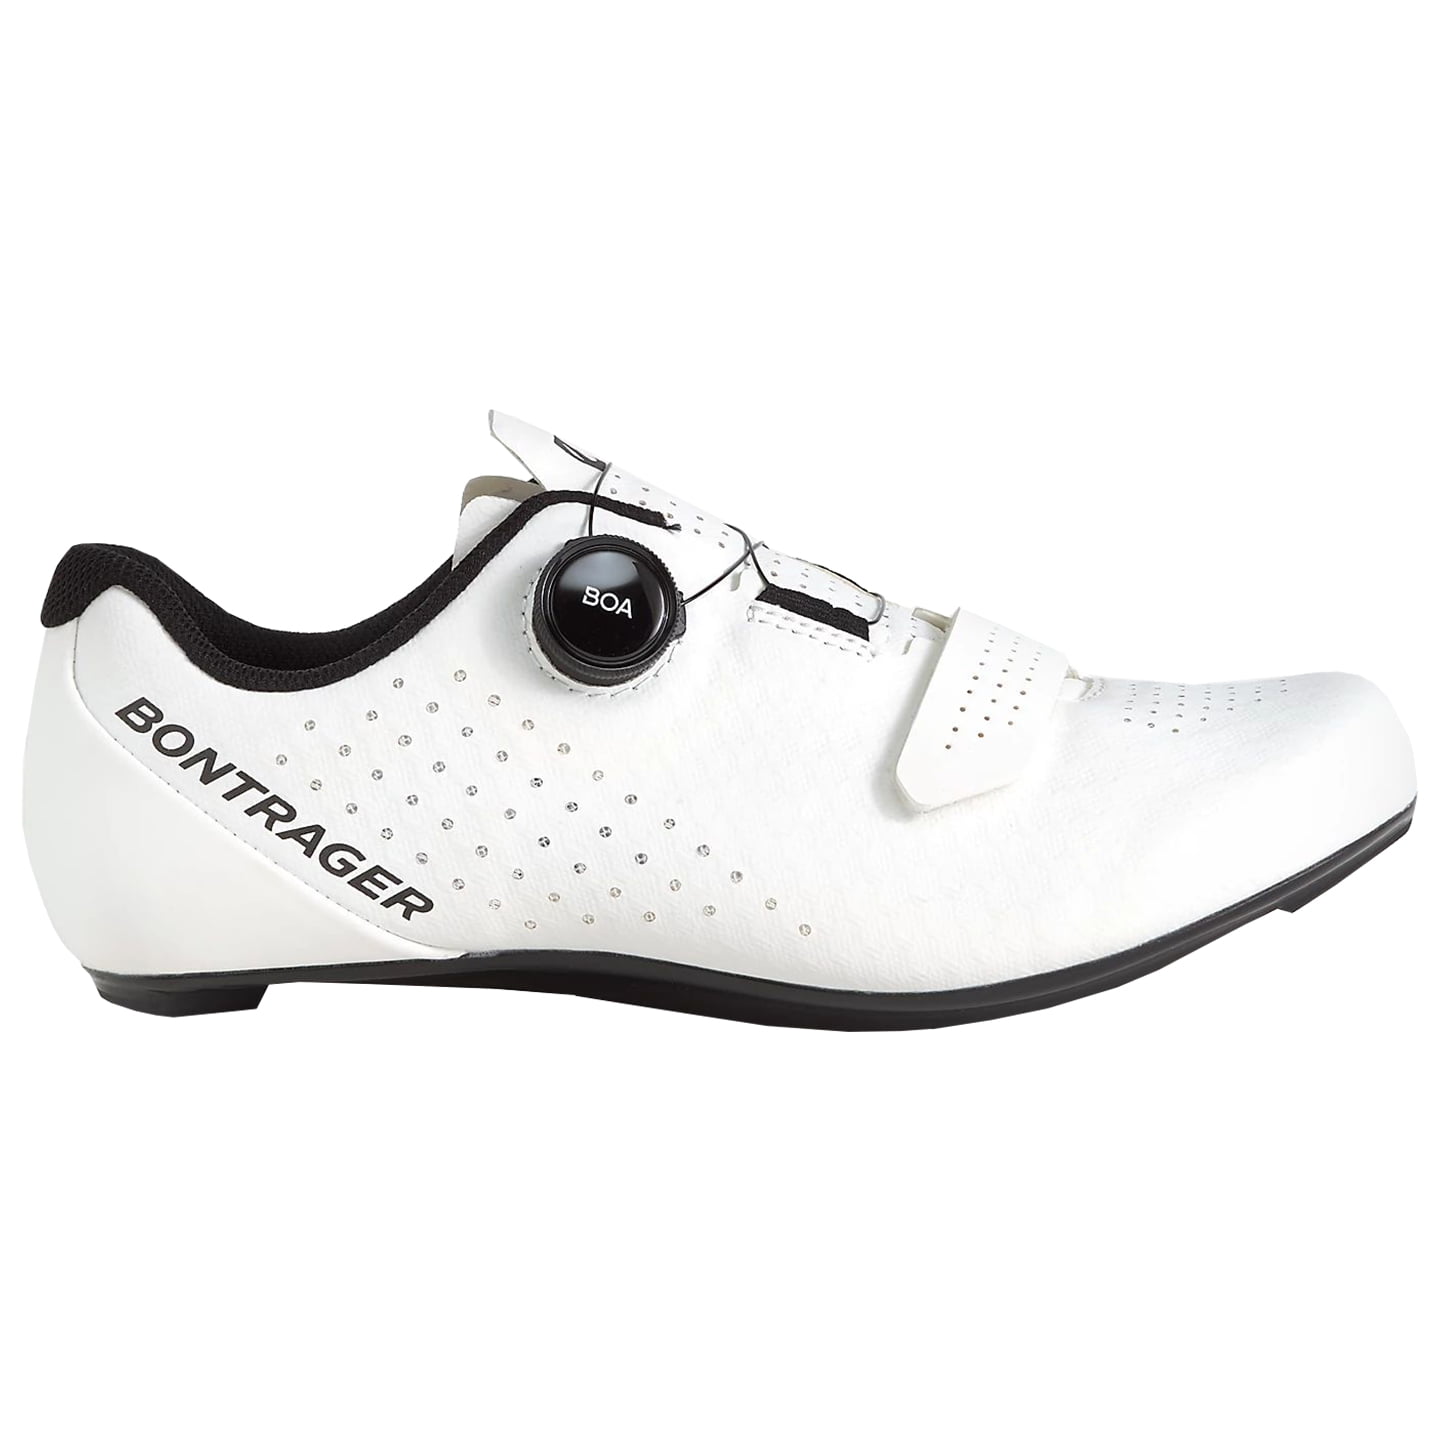 BONTRAGER Circuit Road Bike Shoes Road Shoes, for men, size 47, Cycling shoes